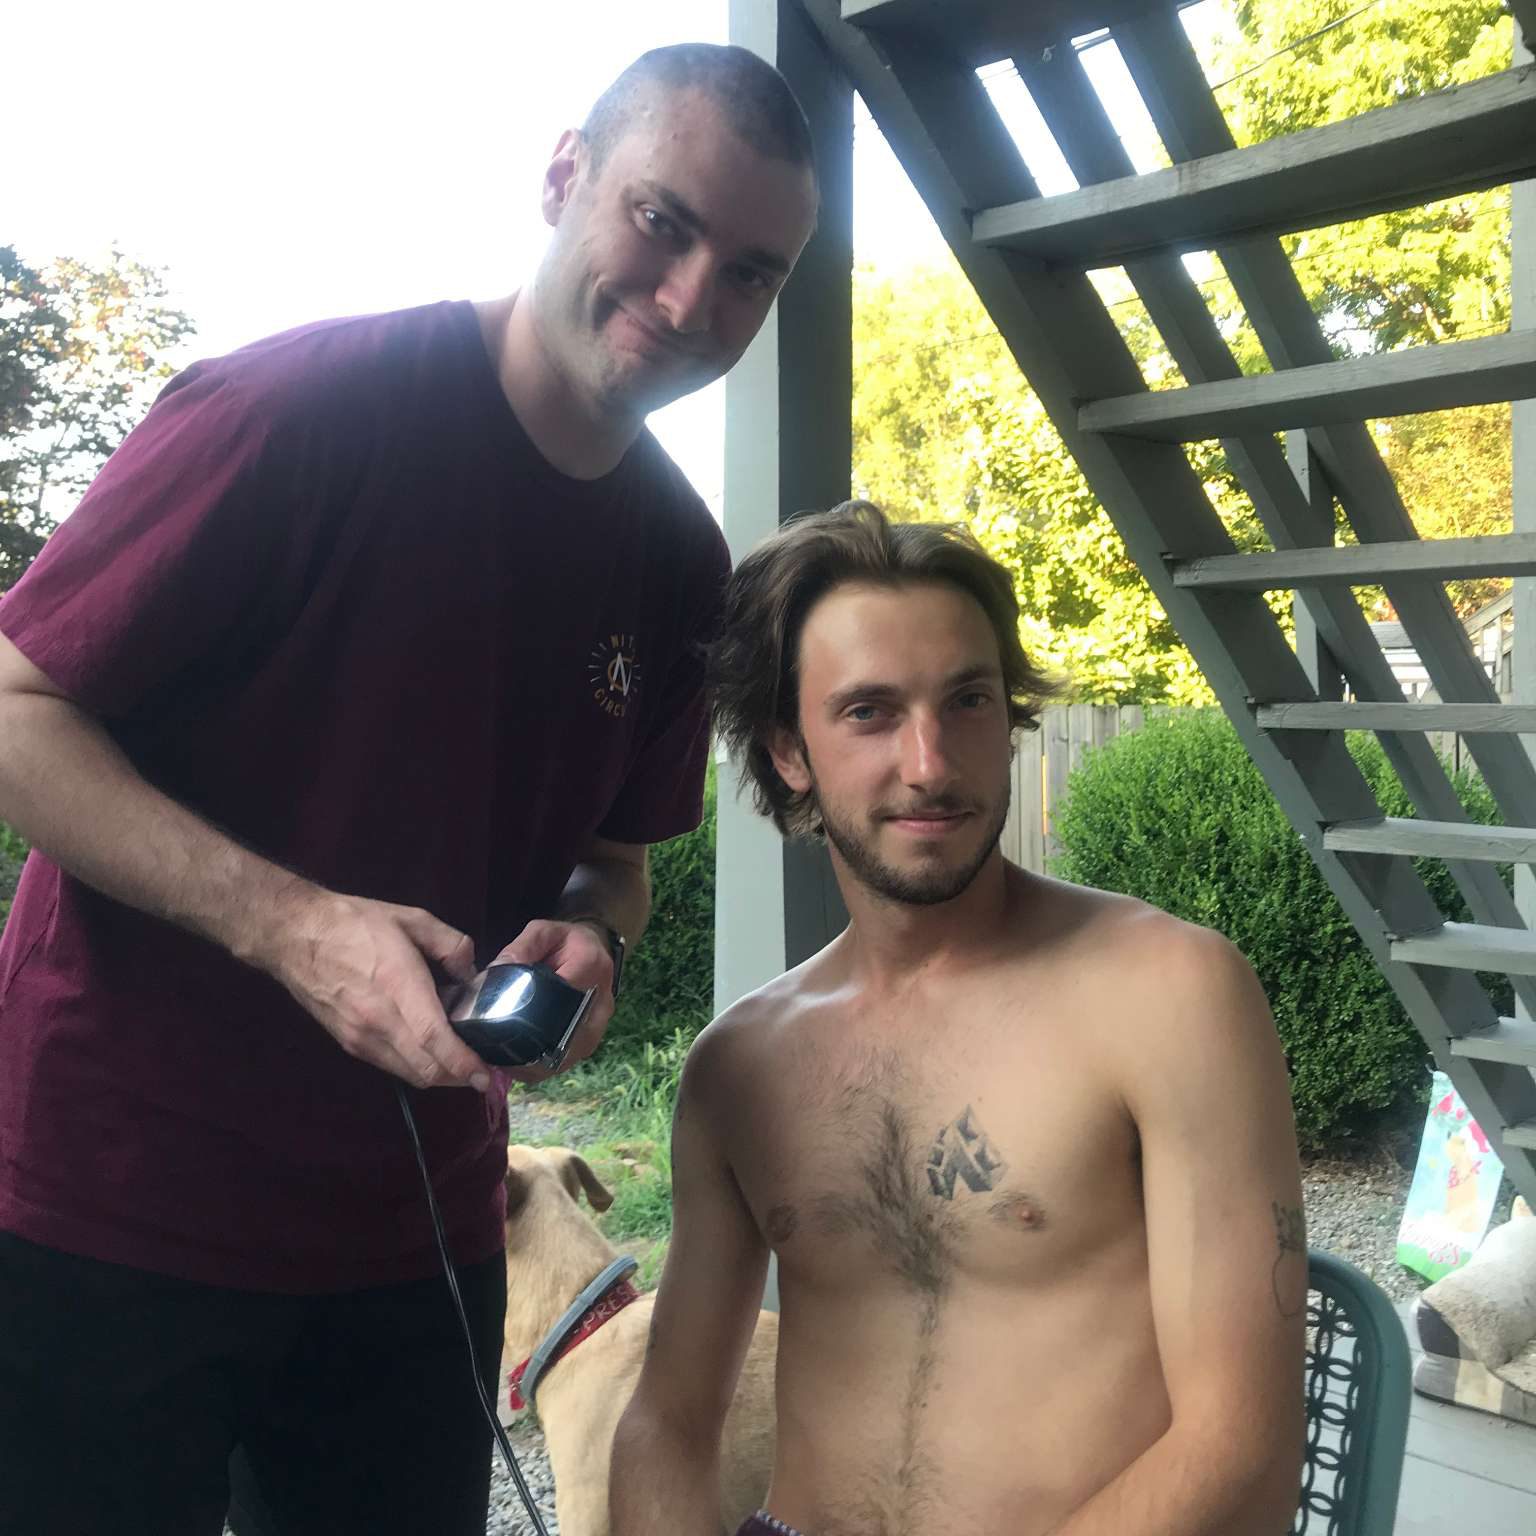 Stevene preparing to shave his friend's head